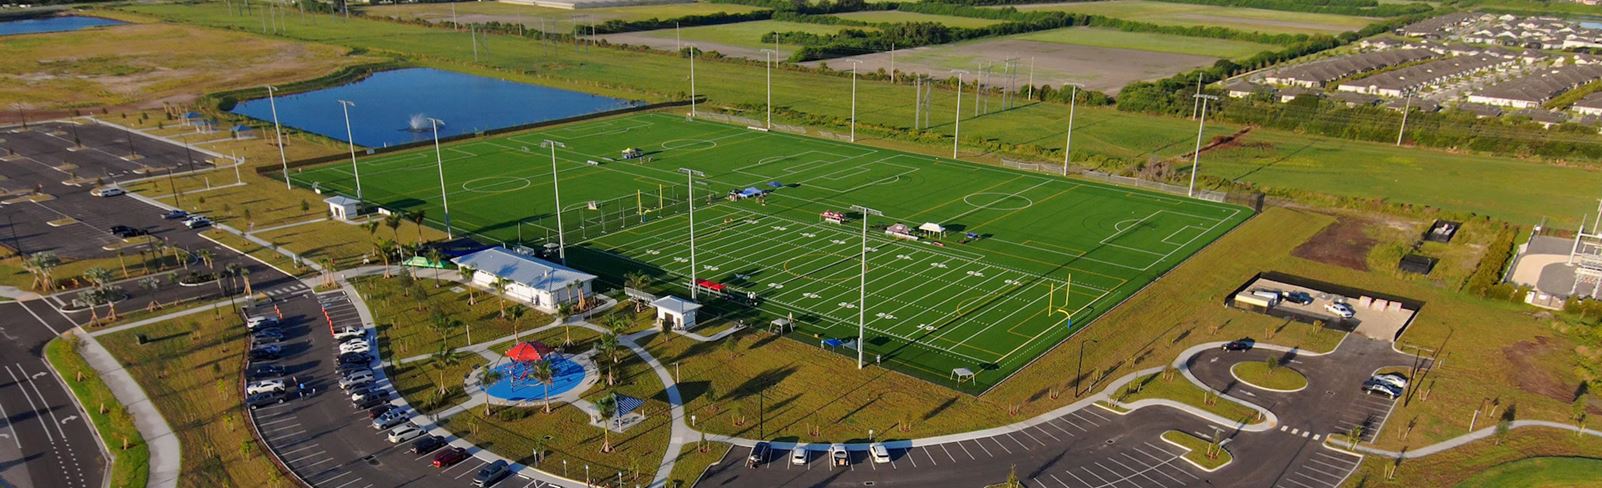 Southshore Sportsplex aerial photo in Waterset community in Apollo Beach, Florida